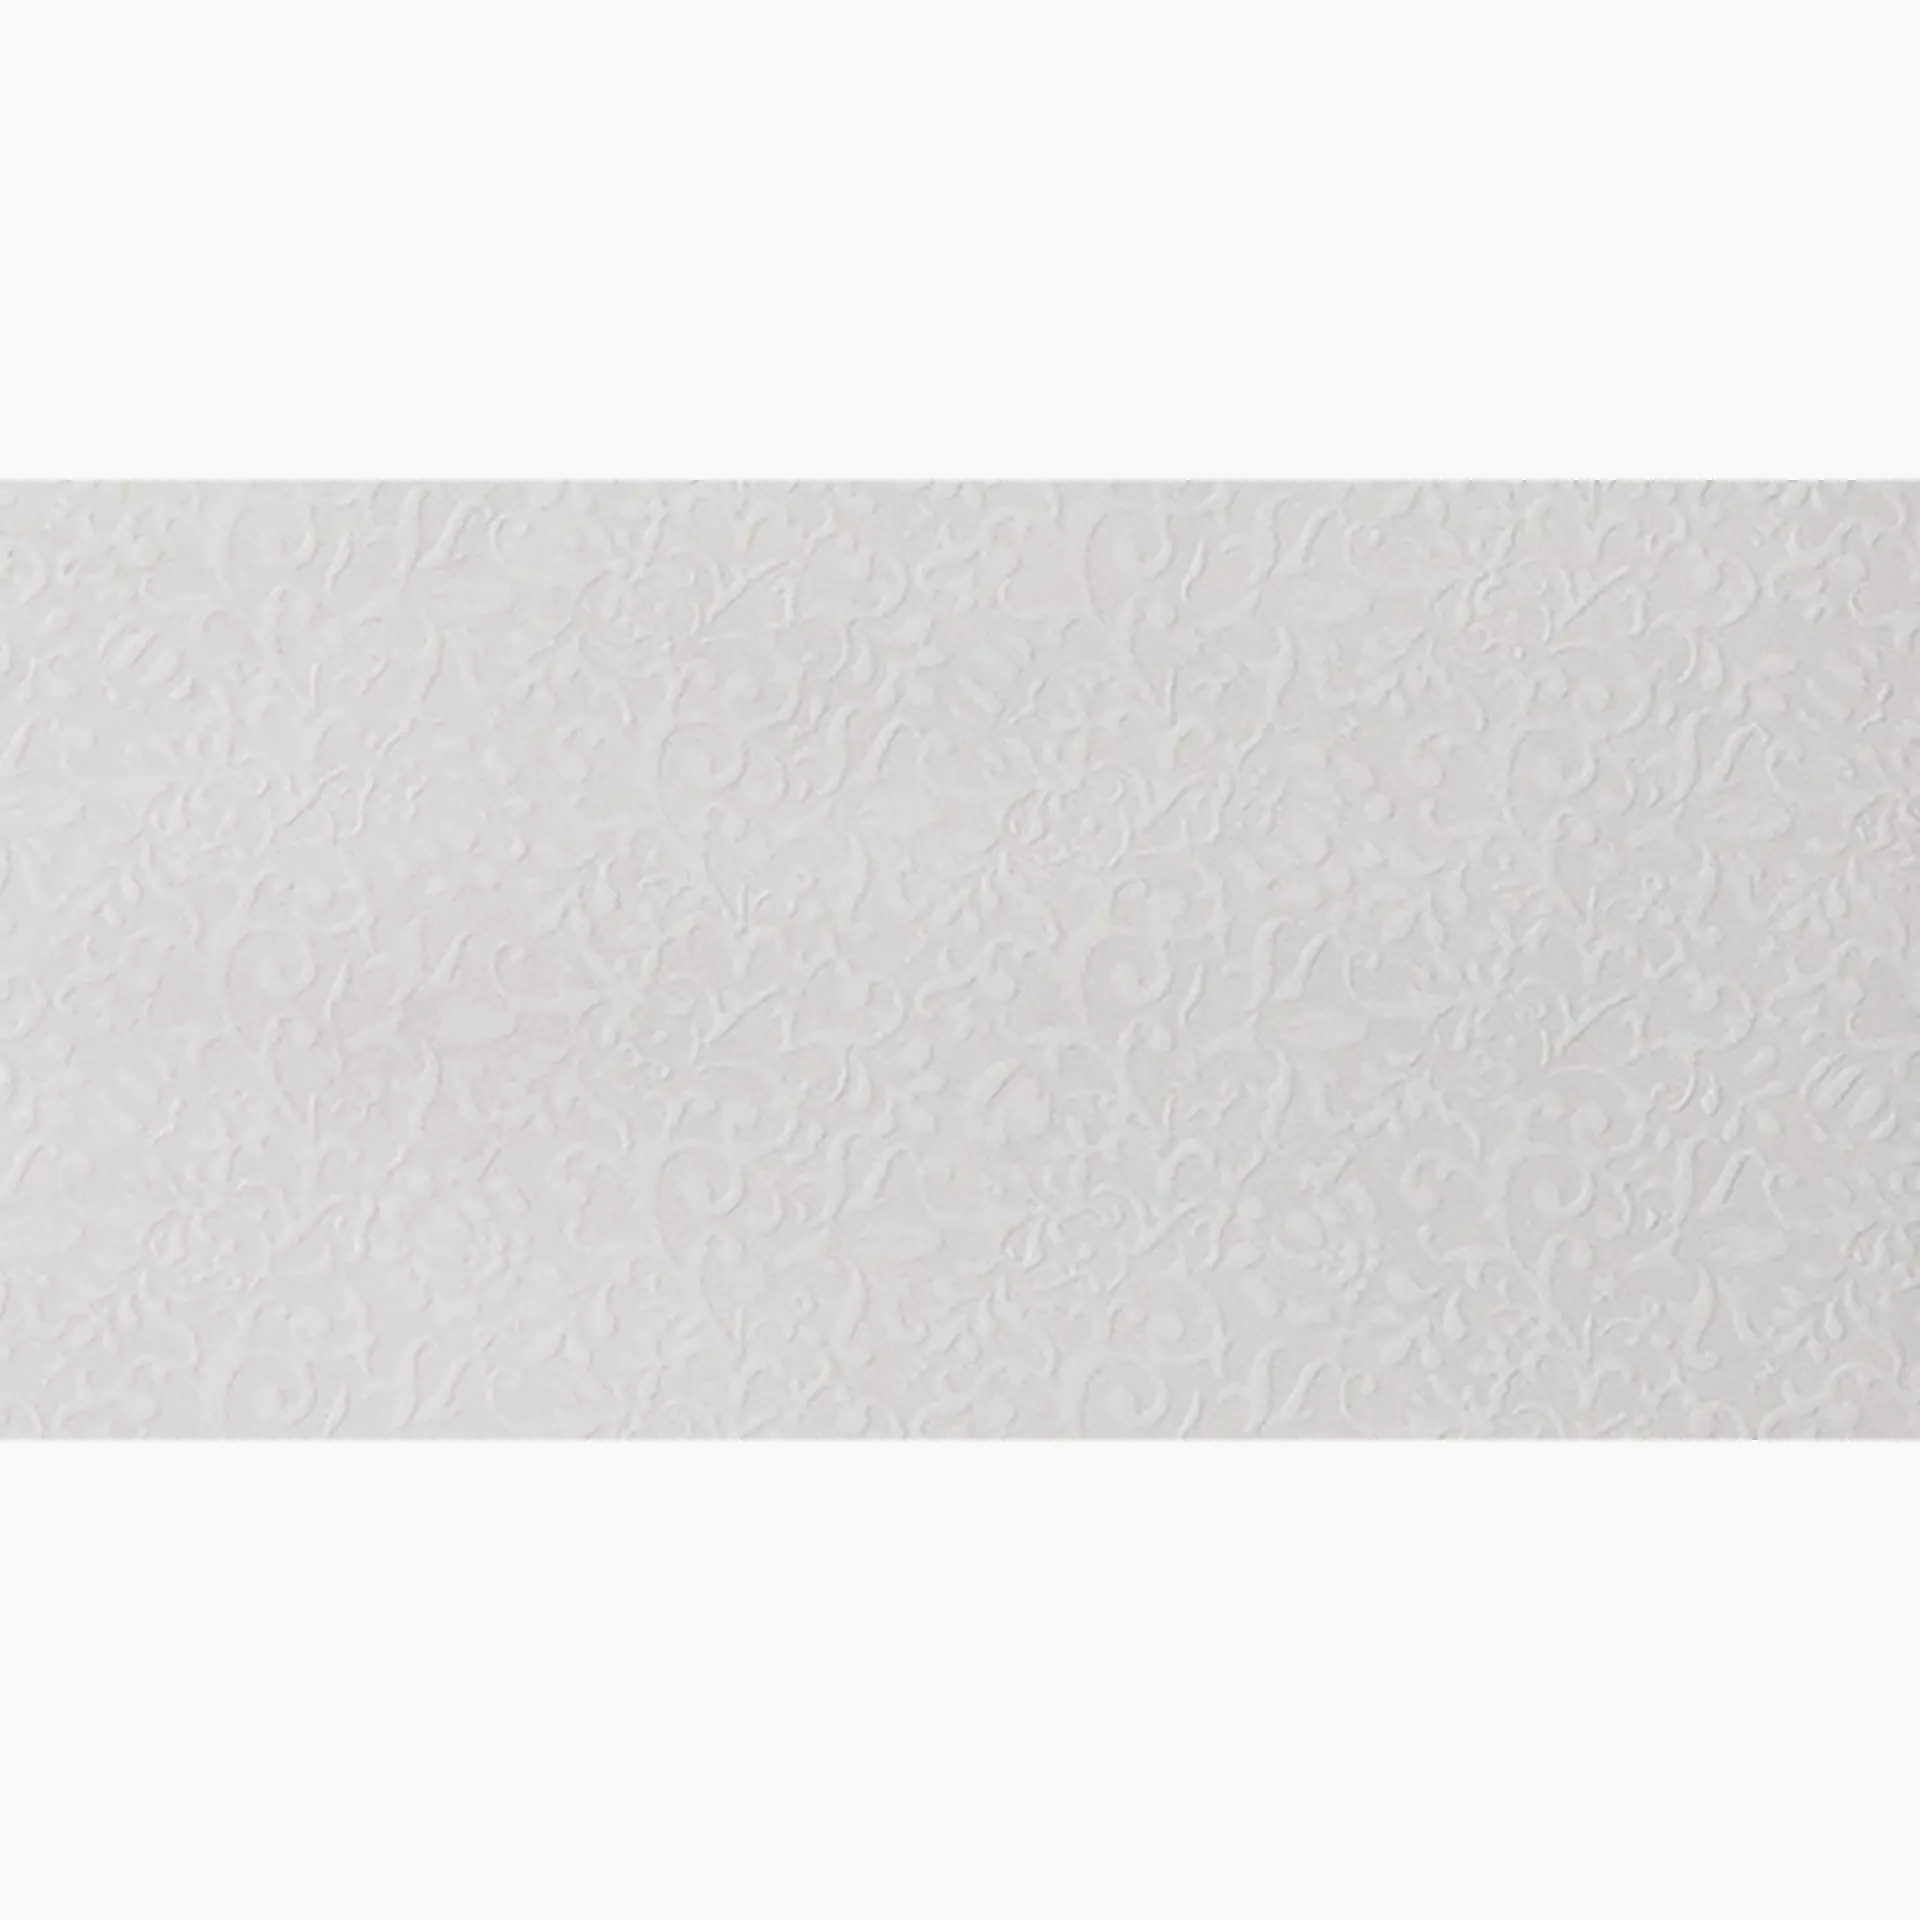 Gigacer Light 250 Bianco Curtain 6LIGHT3060CURTAIN 30x60cm 6mm